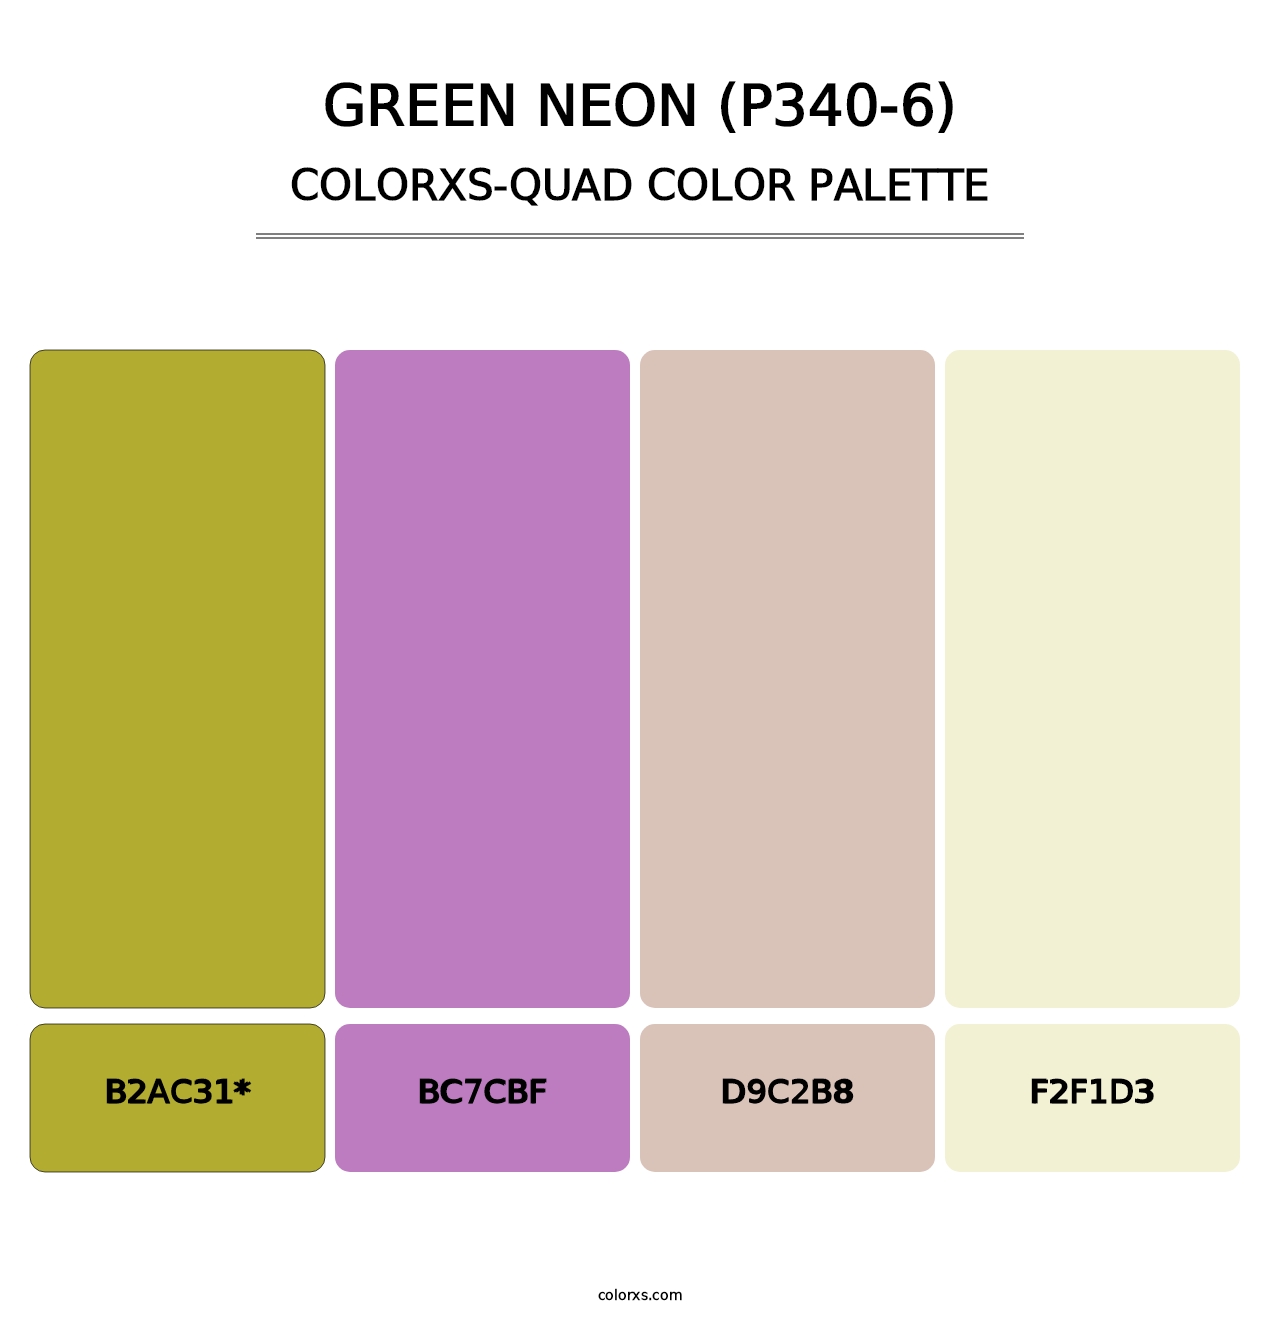 Green Neon (P340-6) - Colorxs Quad Palette